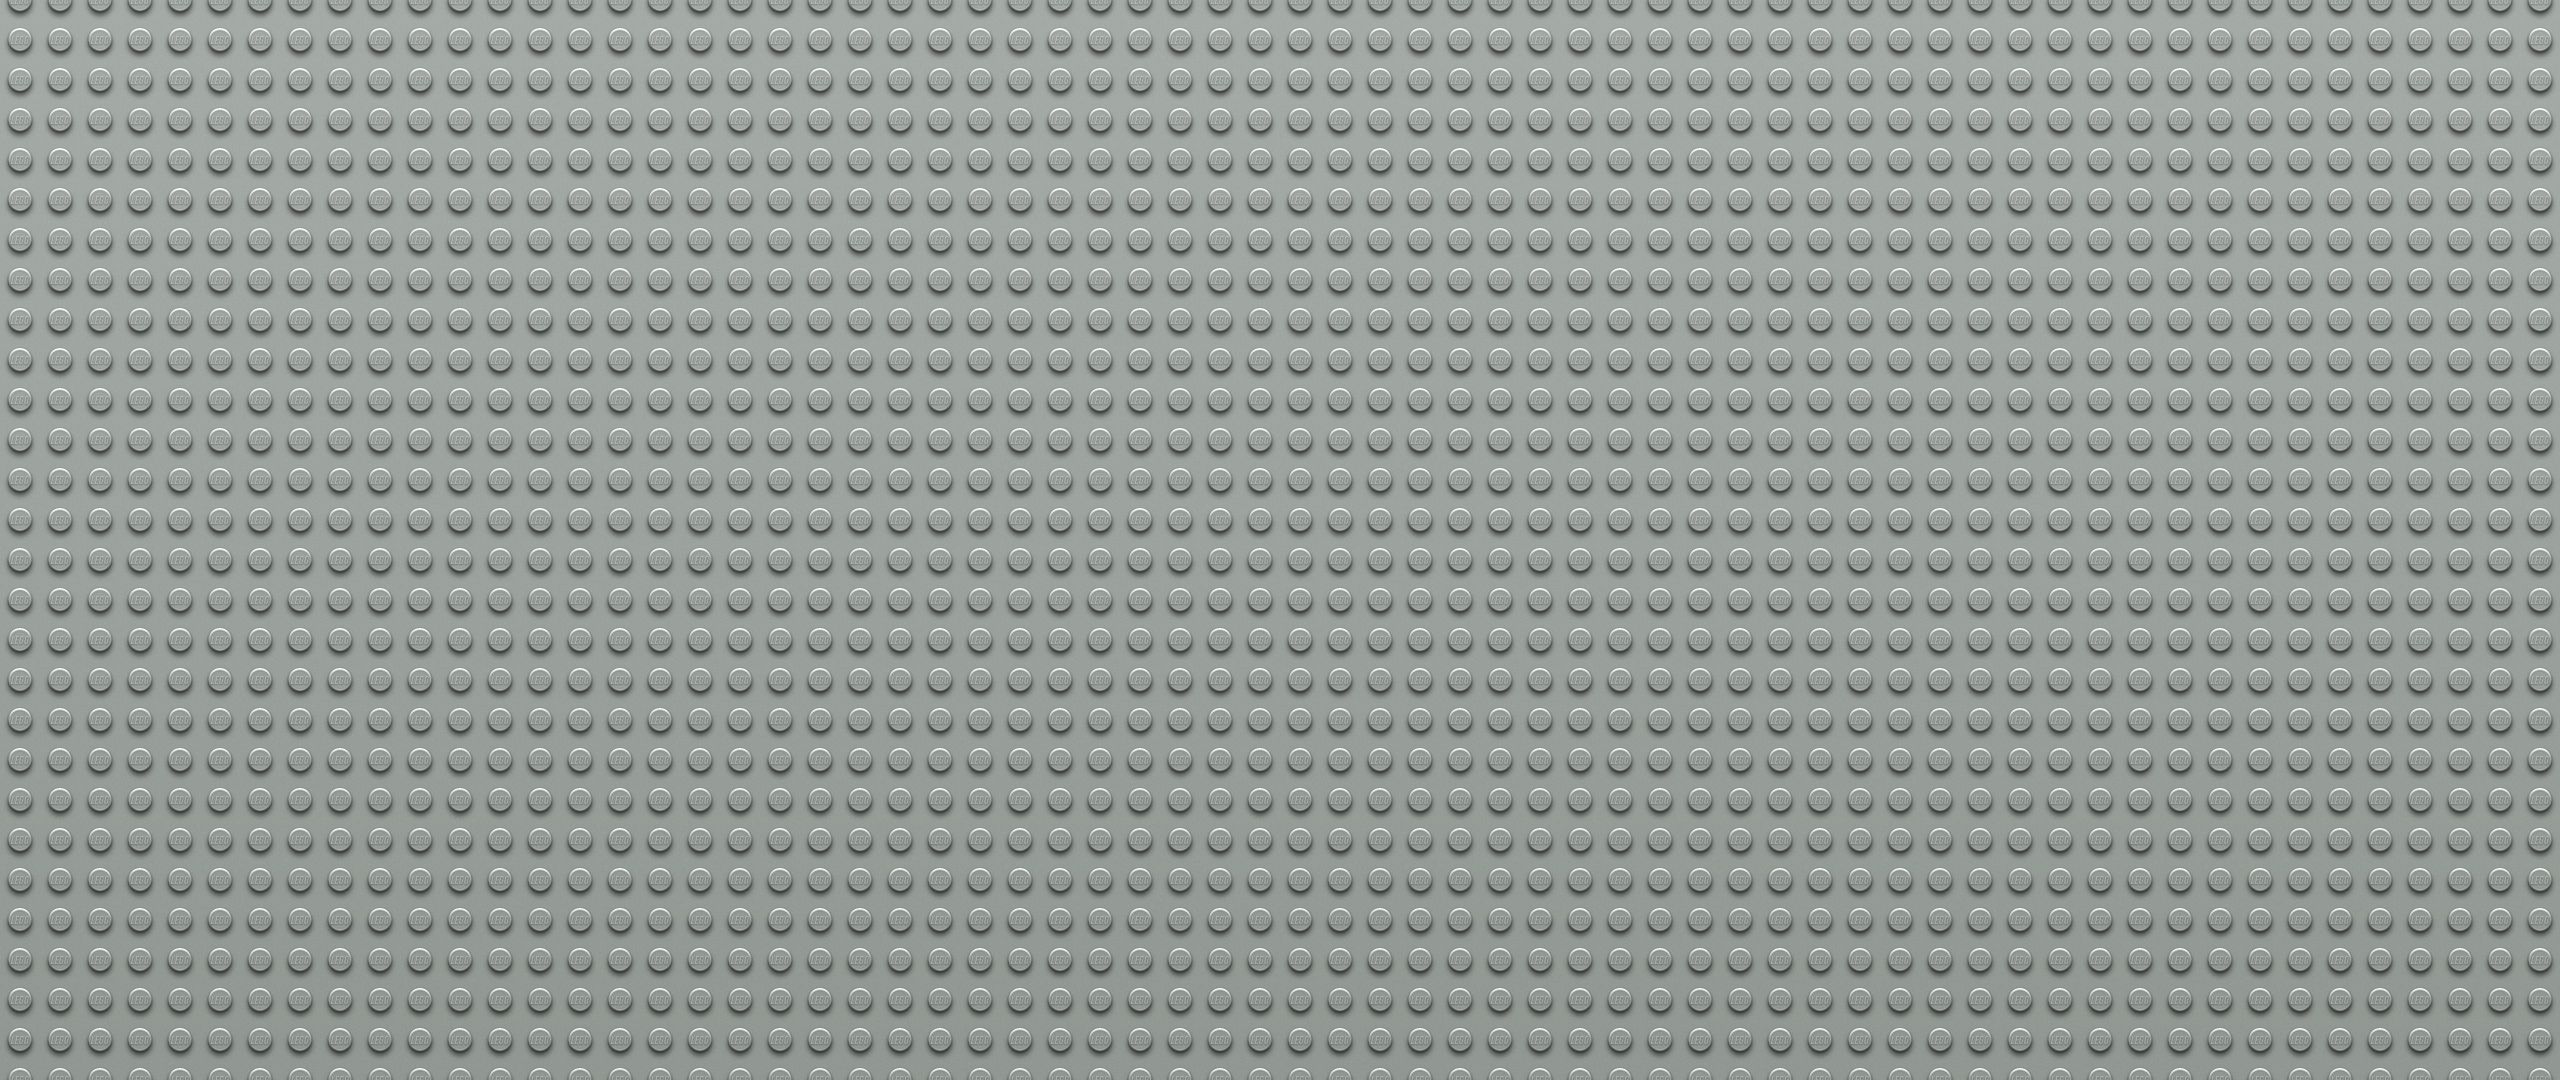 Лего фон серый